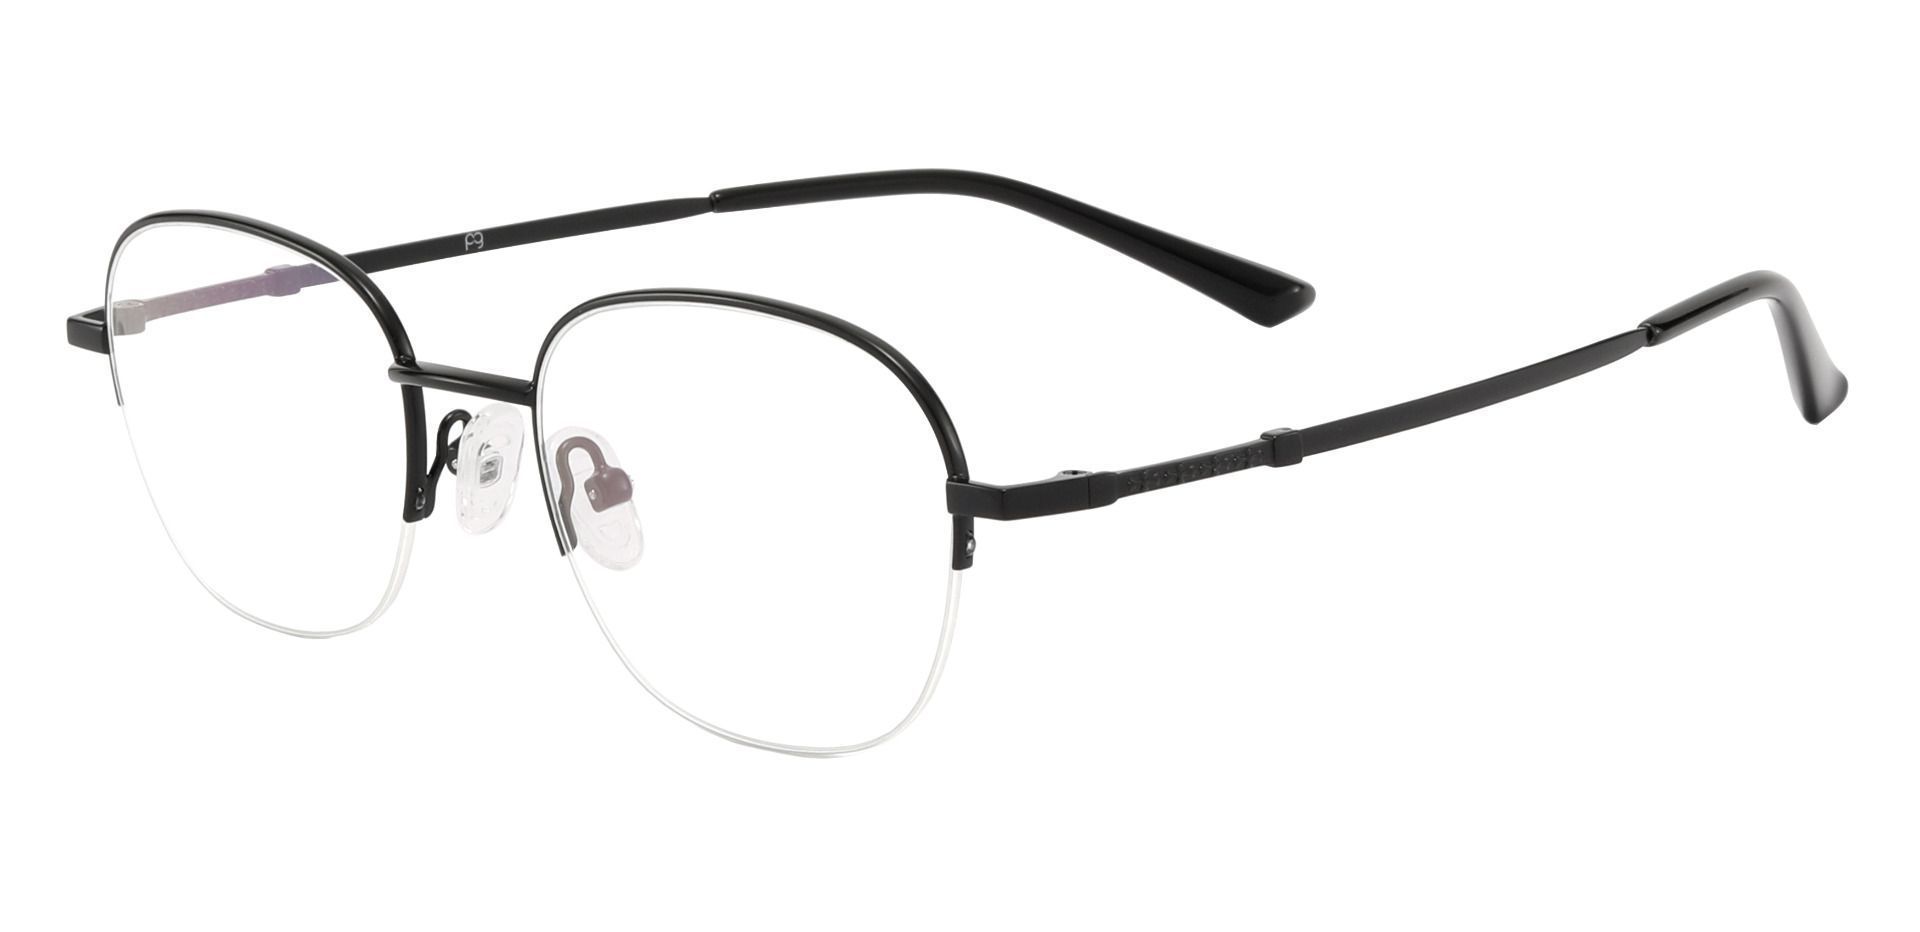 Rochester Oval Progressive Glasses - Black